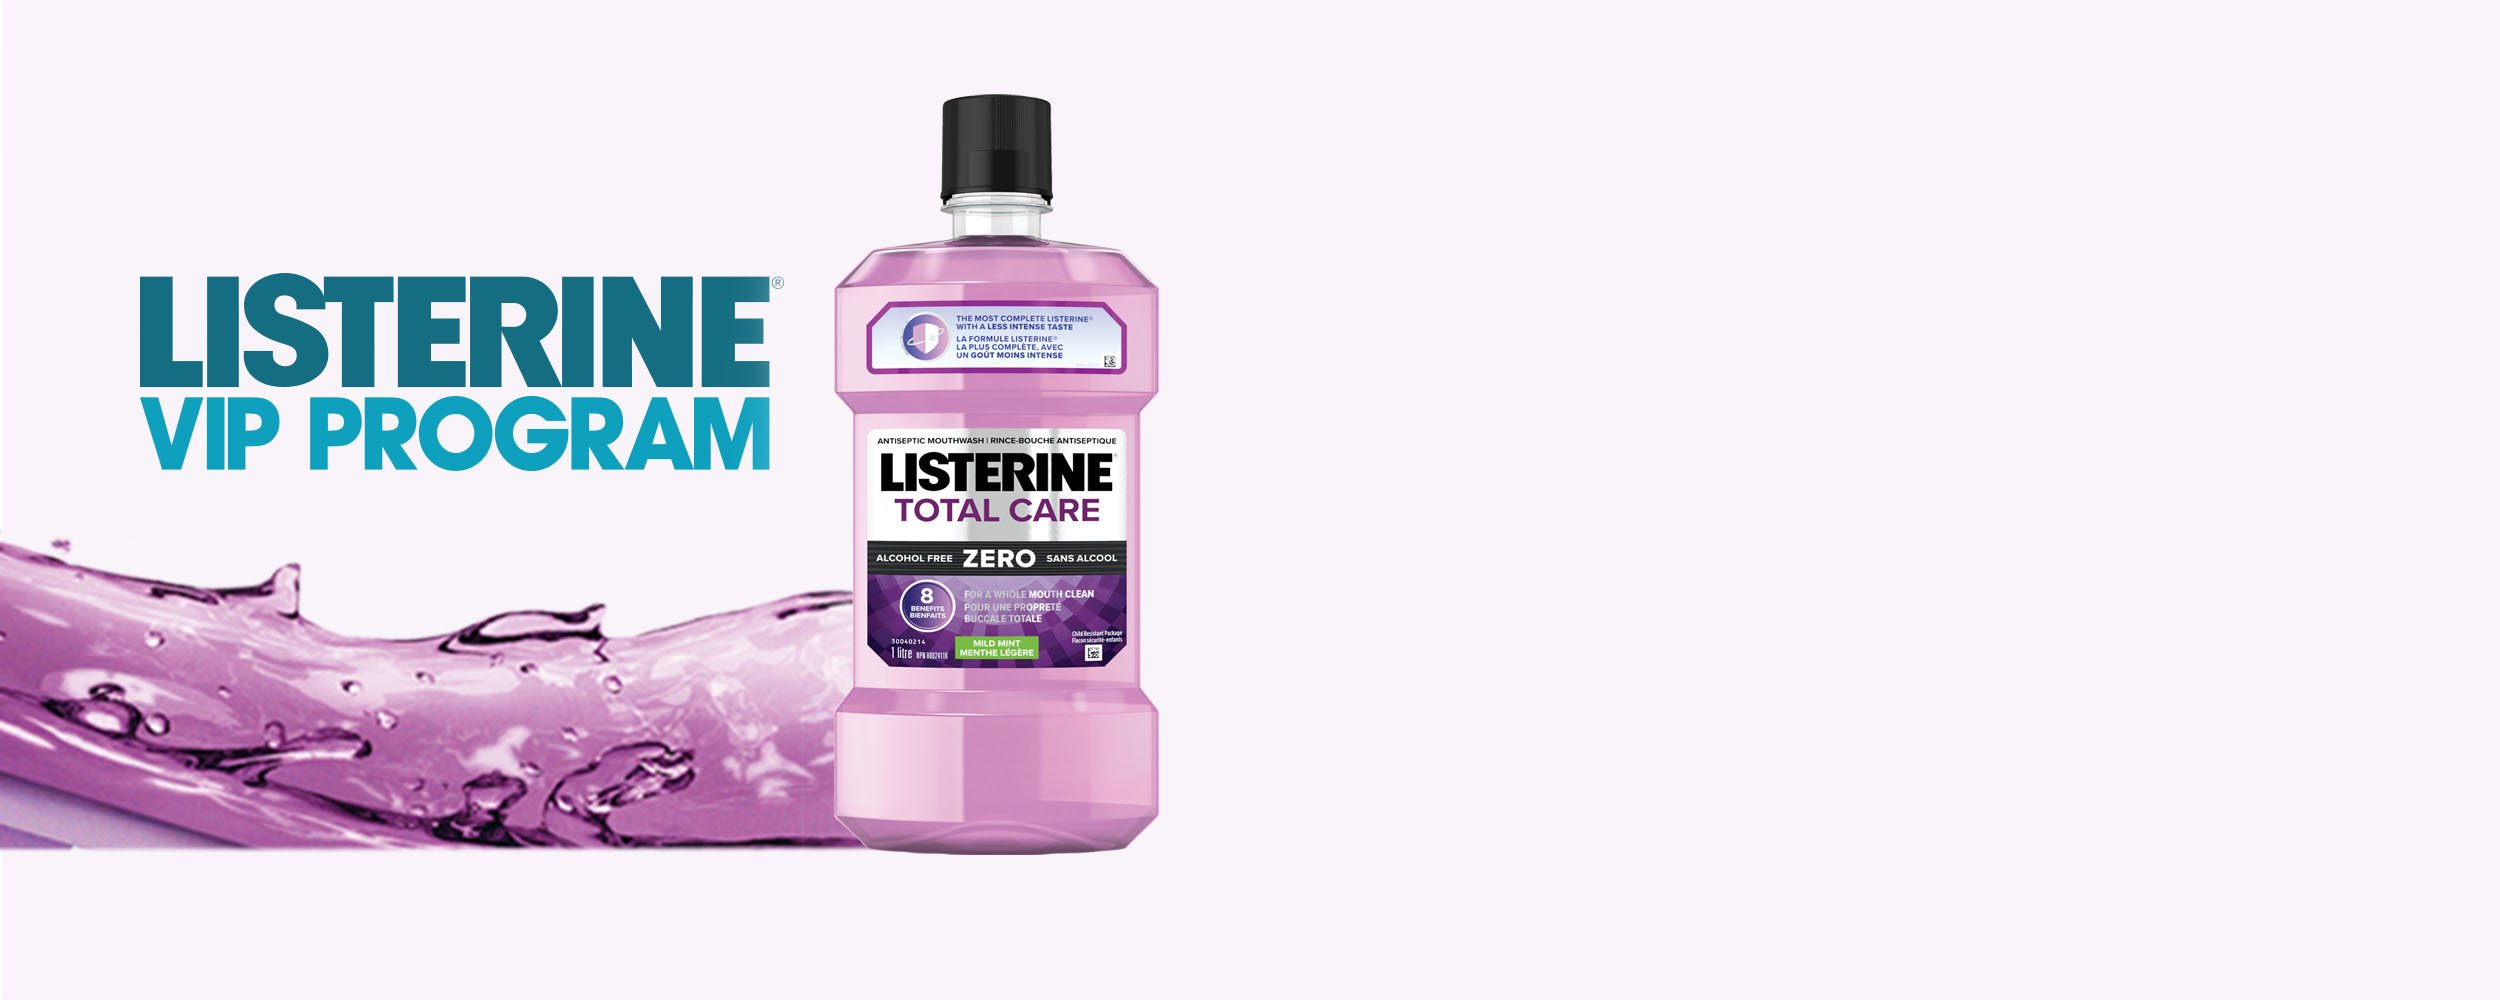 Listerine purple bottle mouthwash with VIP program text beside it